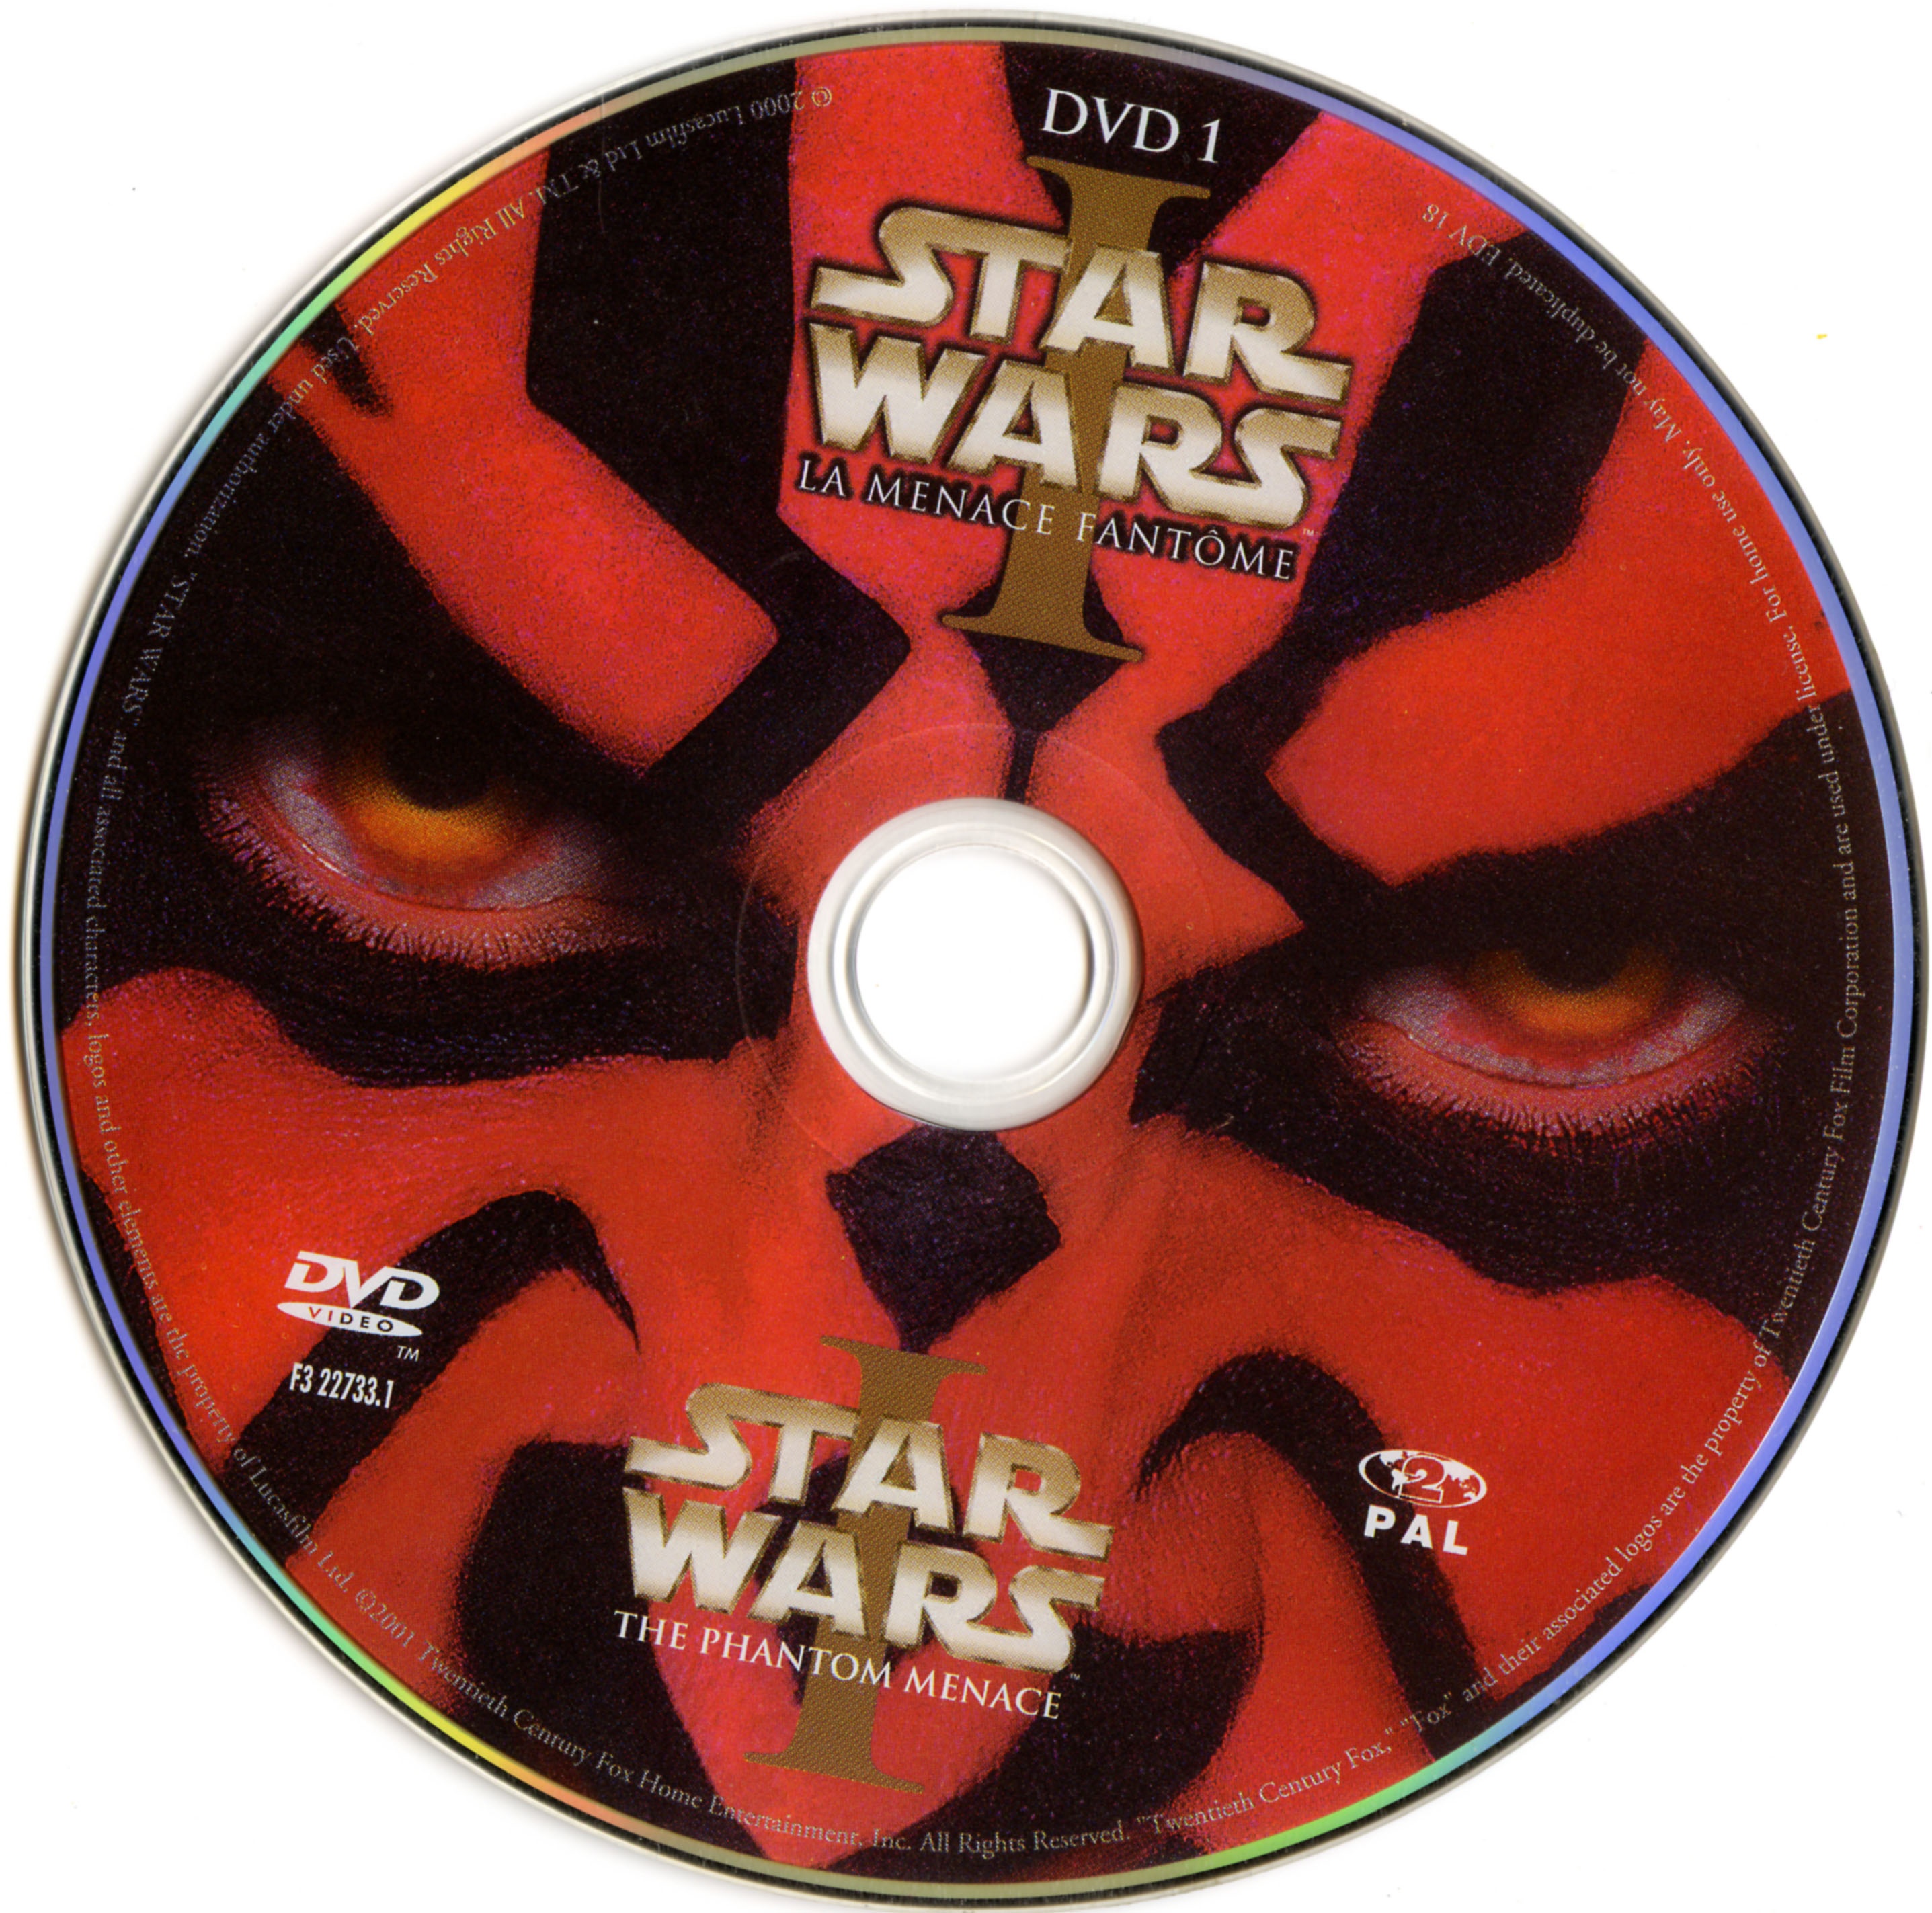 Star Wars la menace fantome DISC 1